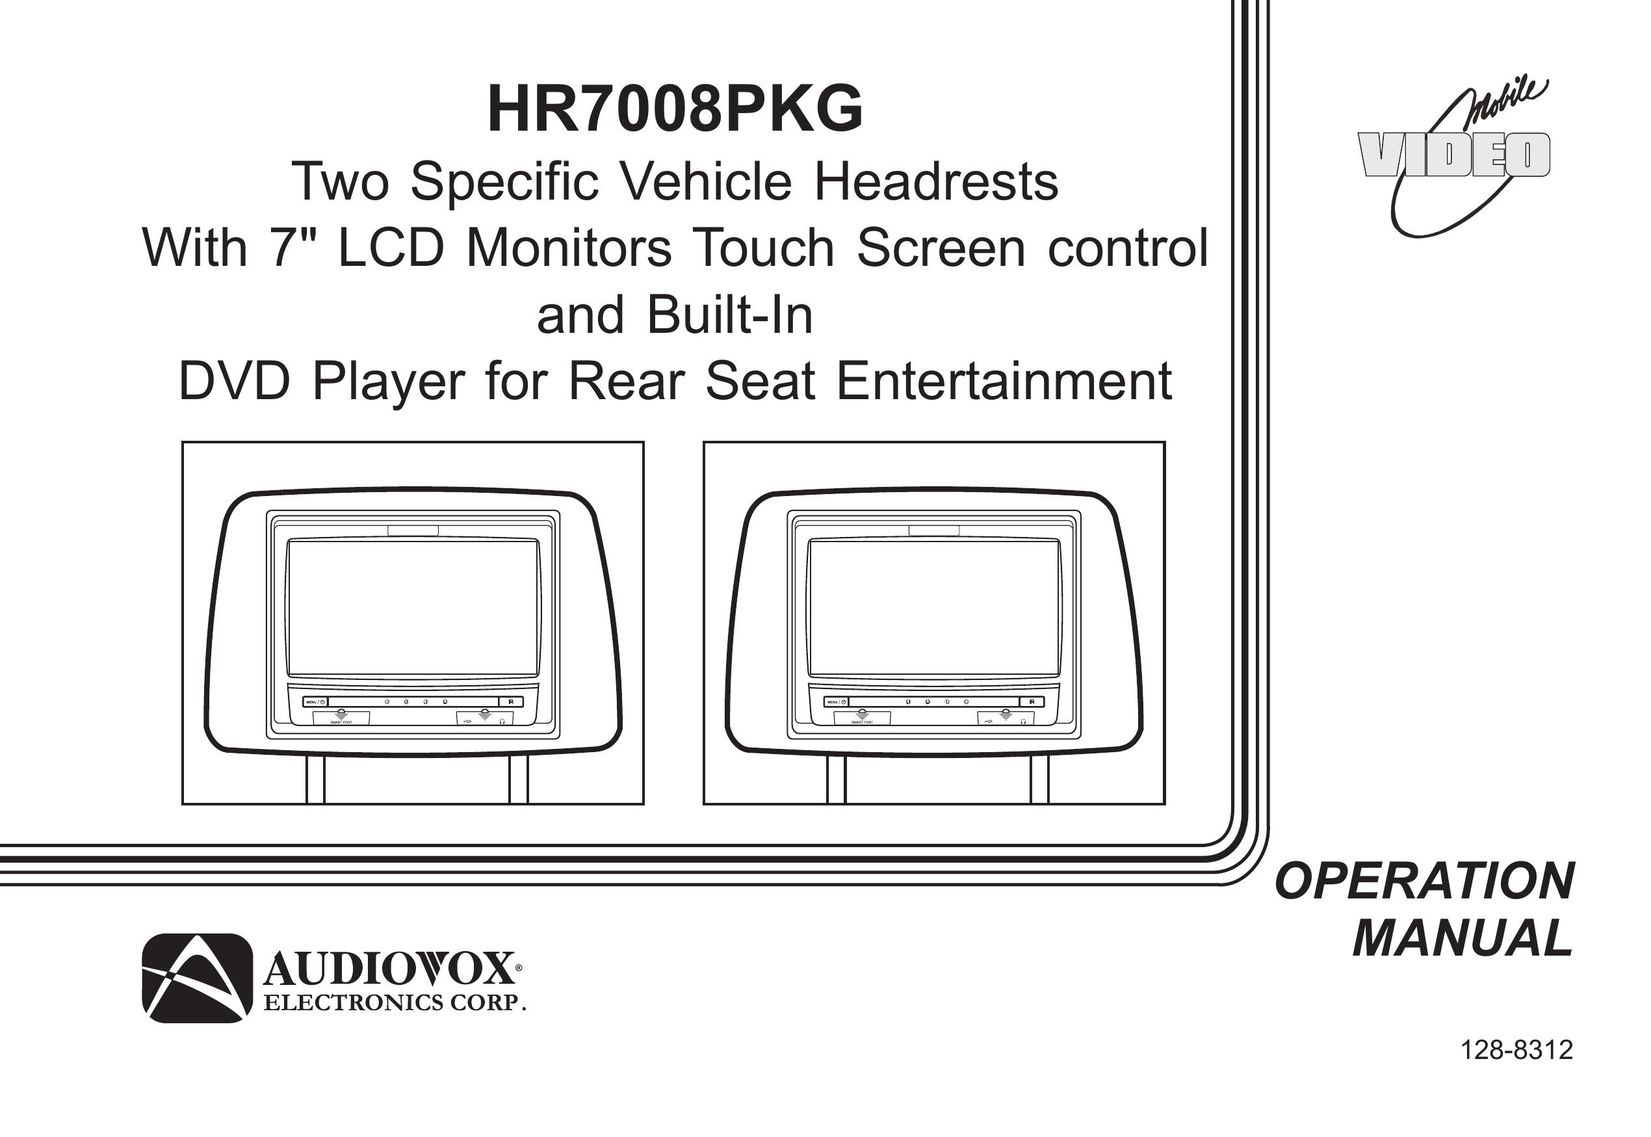 Audiovox HR7008PKG Car Video System User Manual